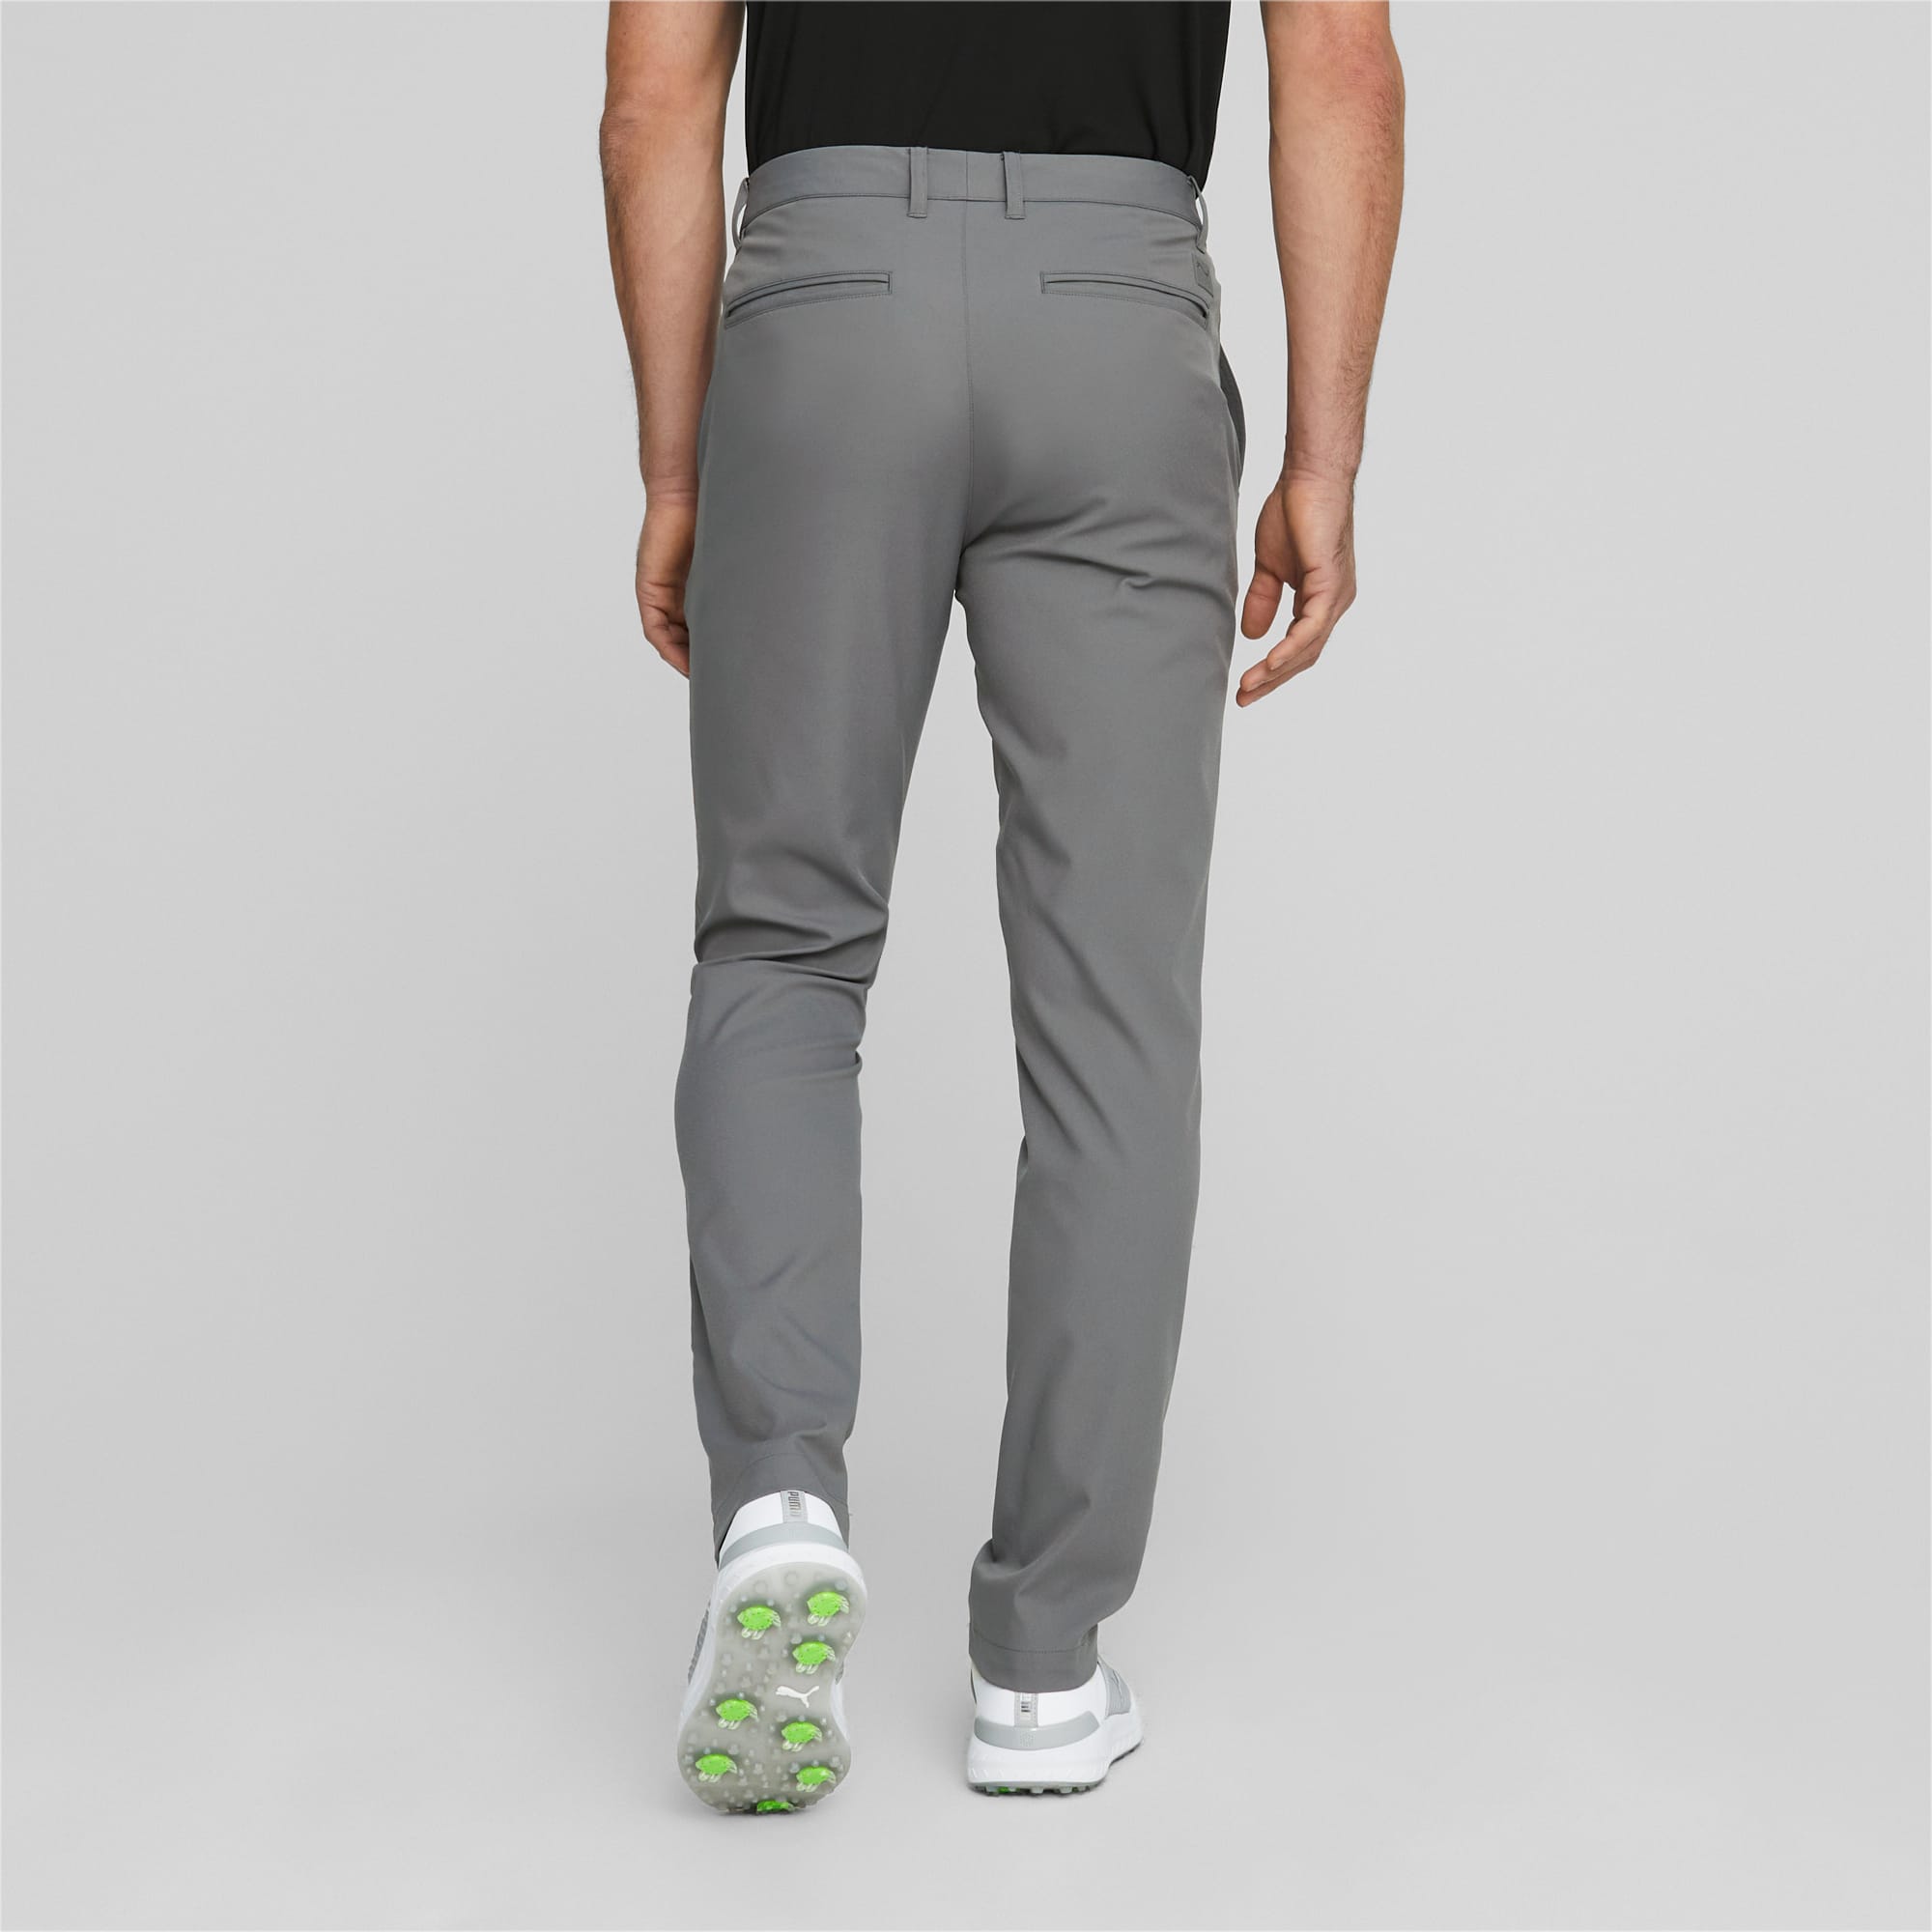 PUMA Dealer Tailored Golf Pants Men, Slate Sky, Size 33/32, Clothing